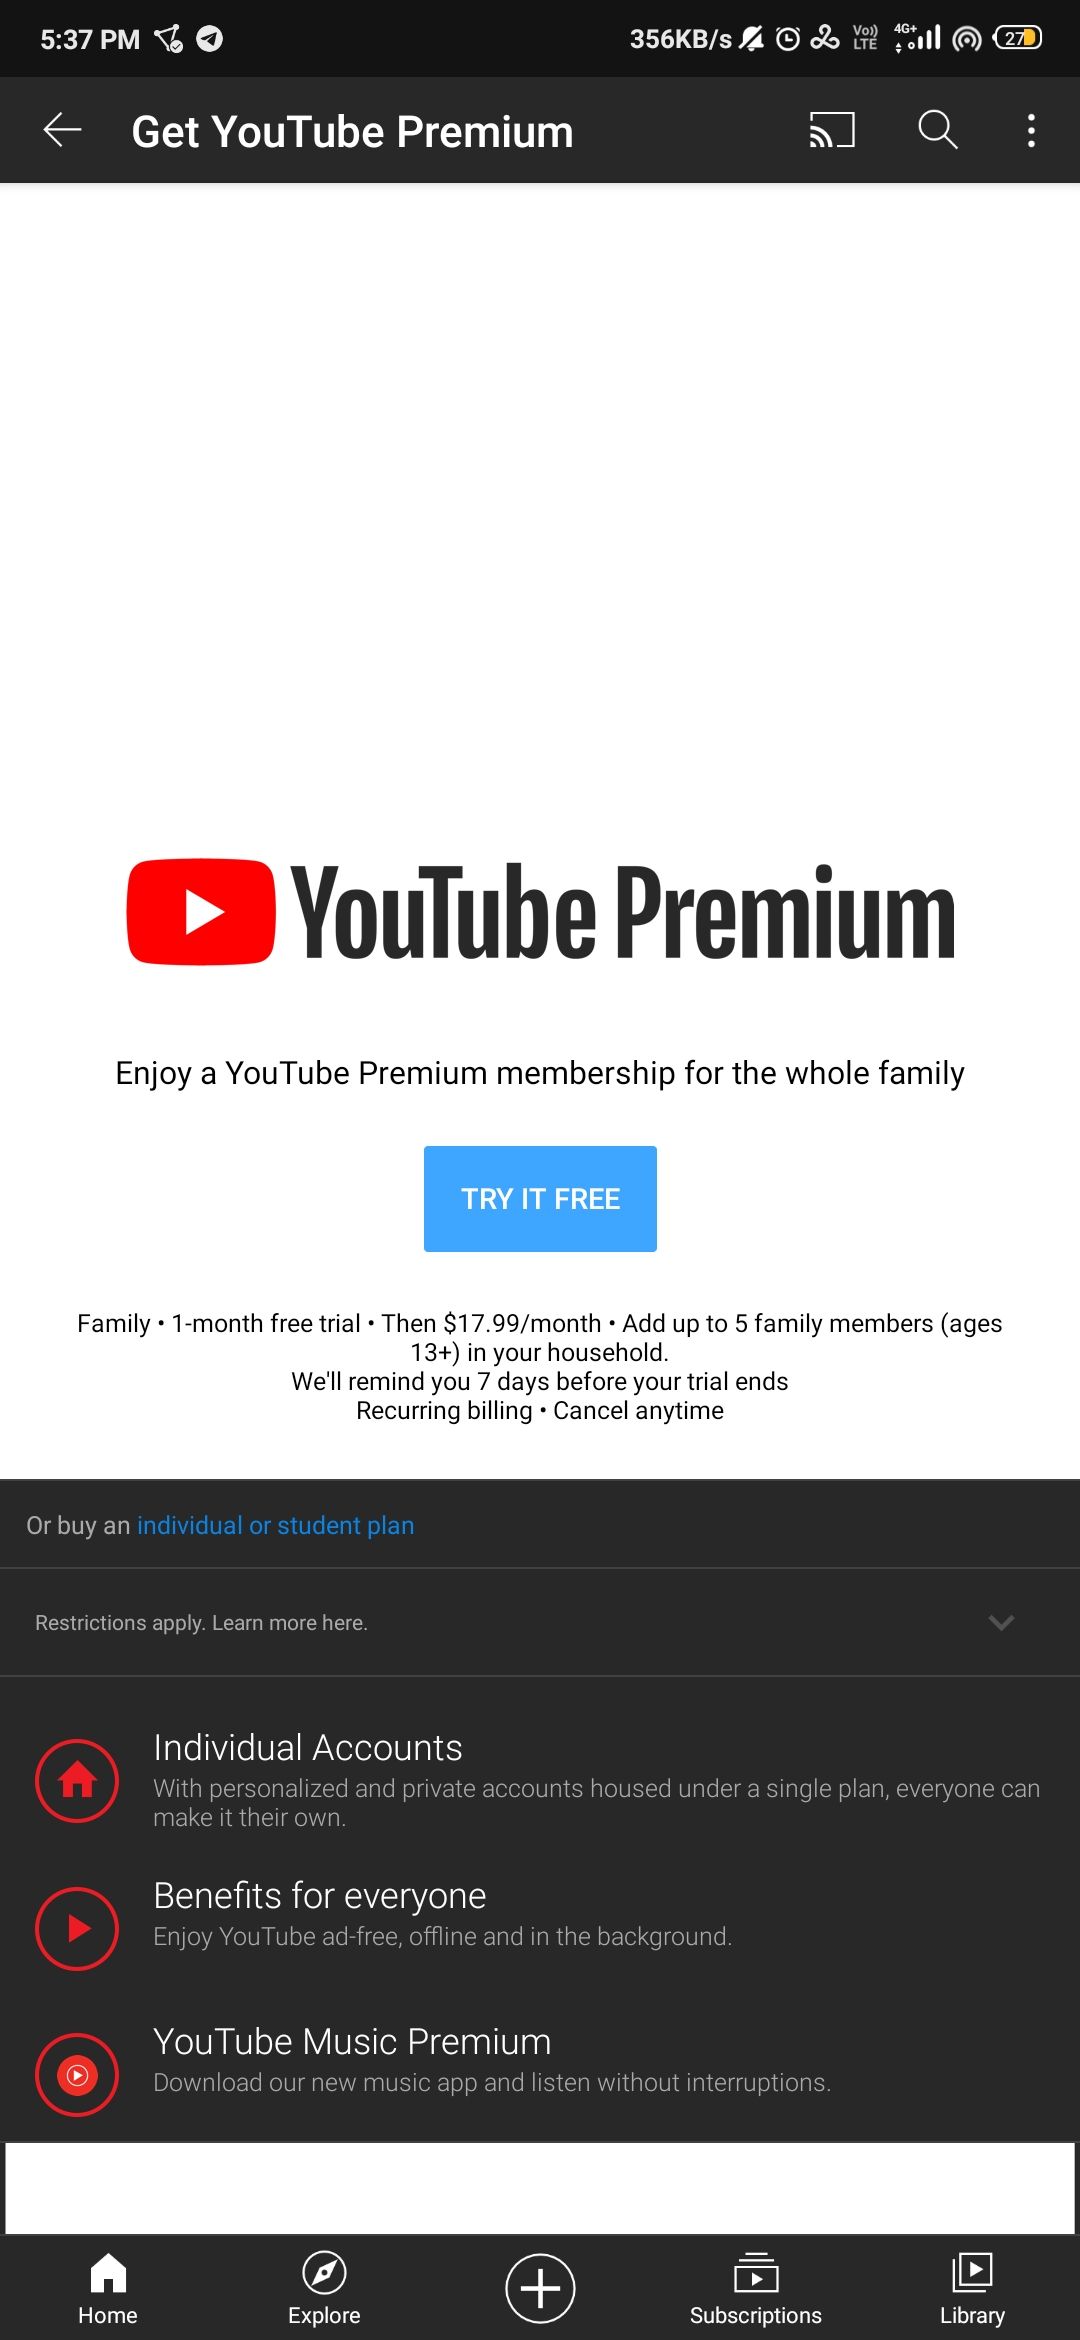 YouTube Premium cost